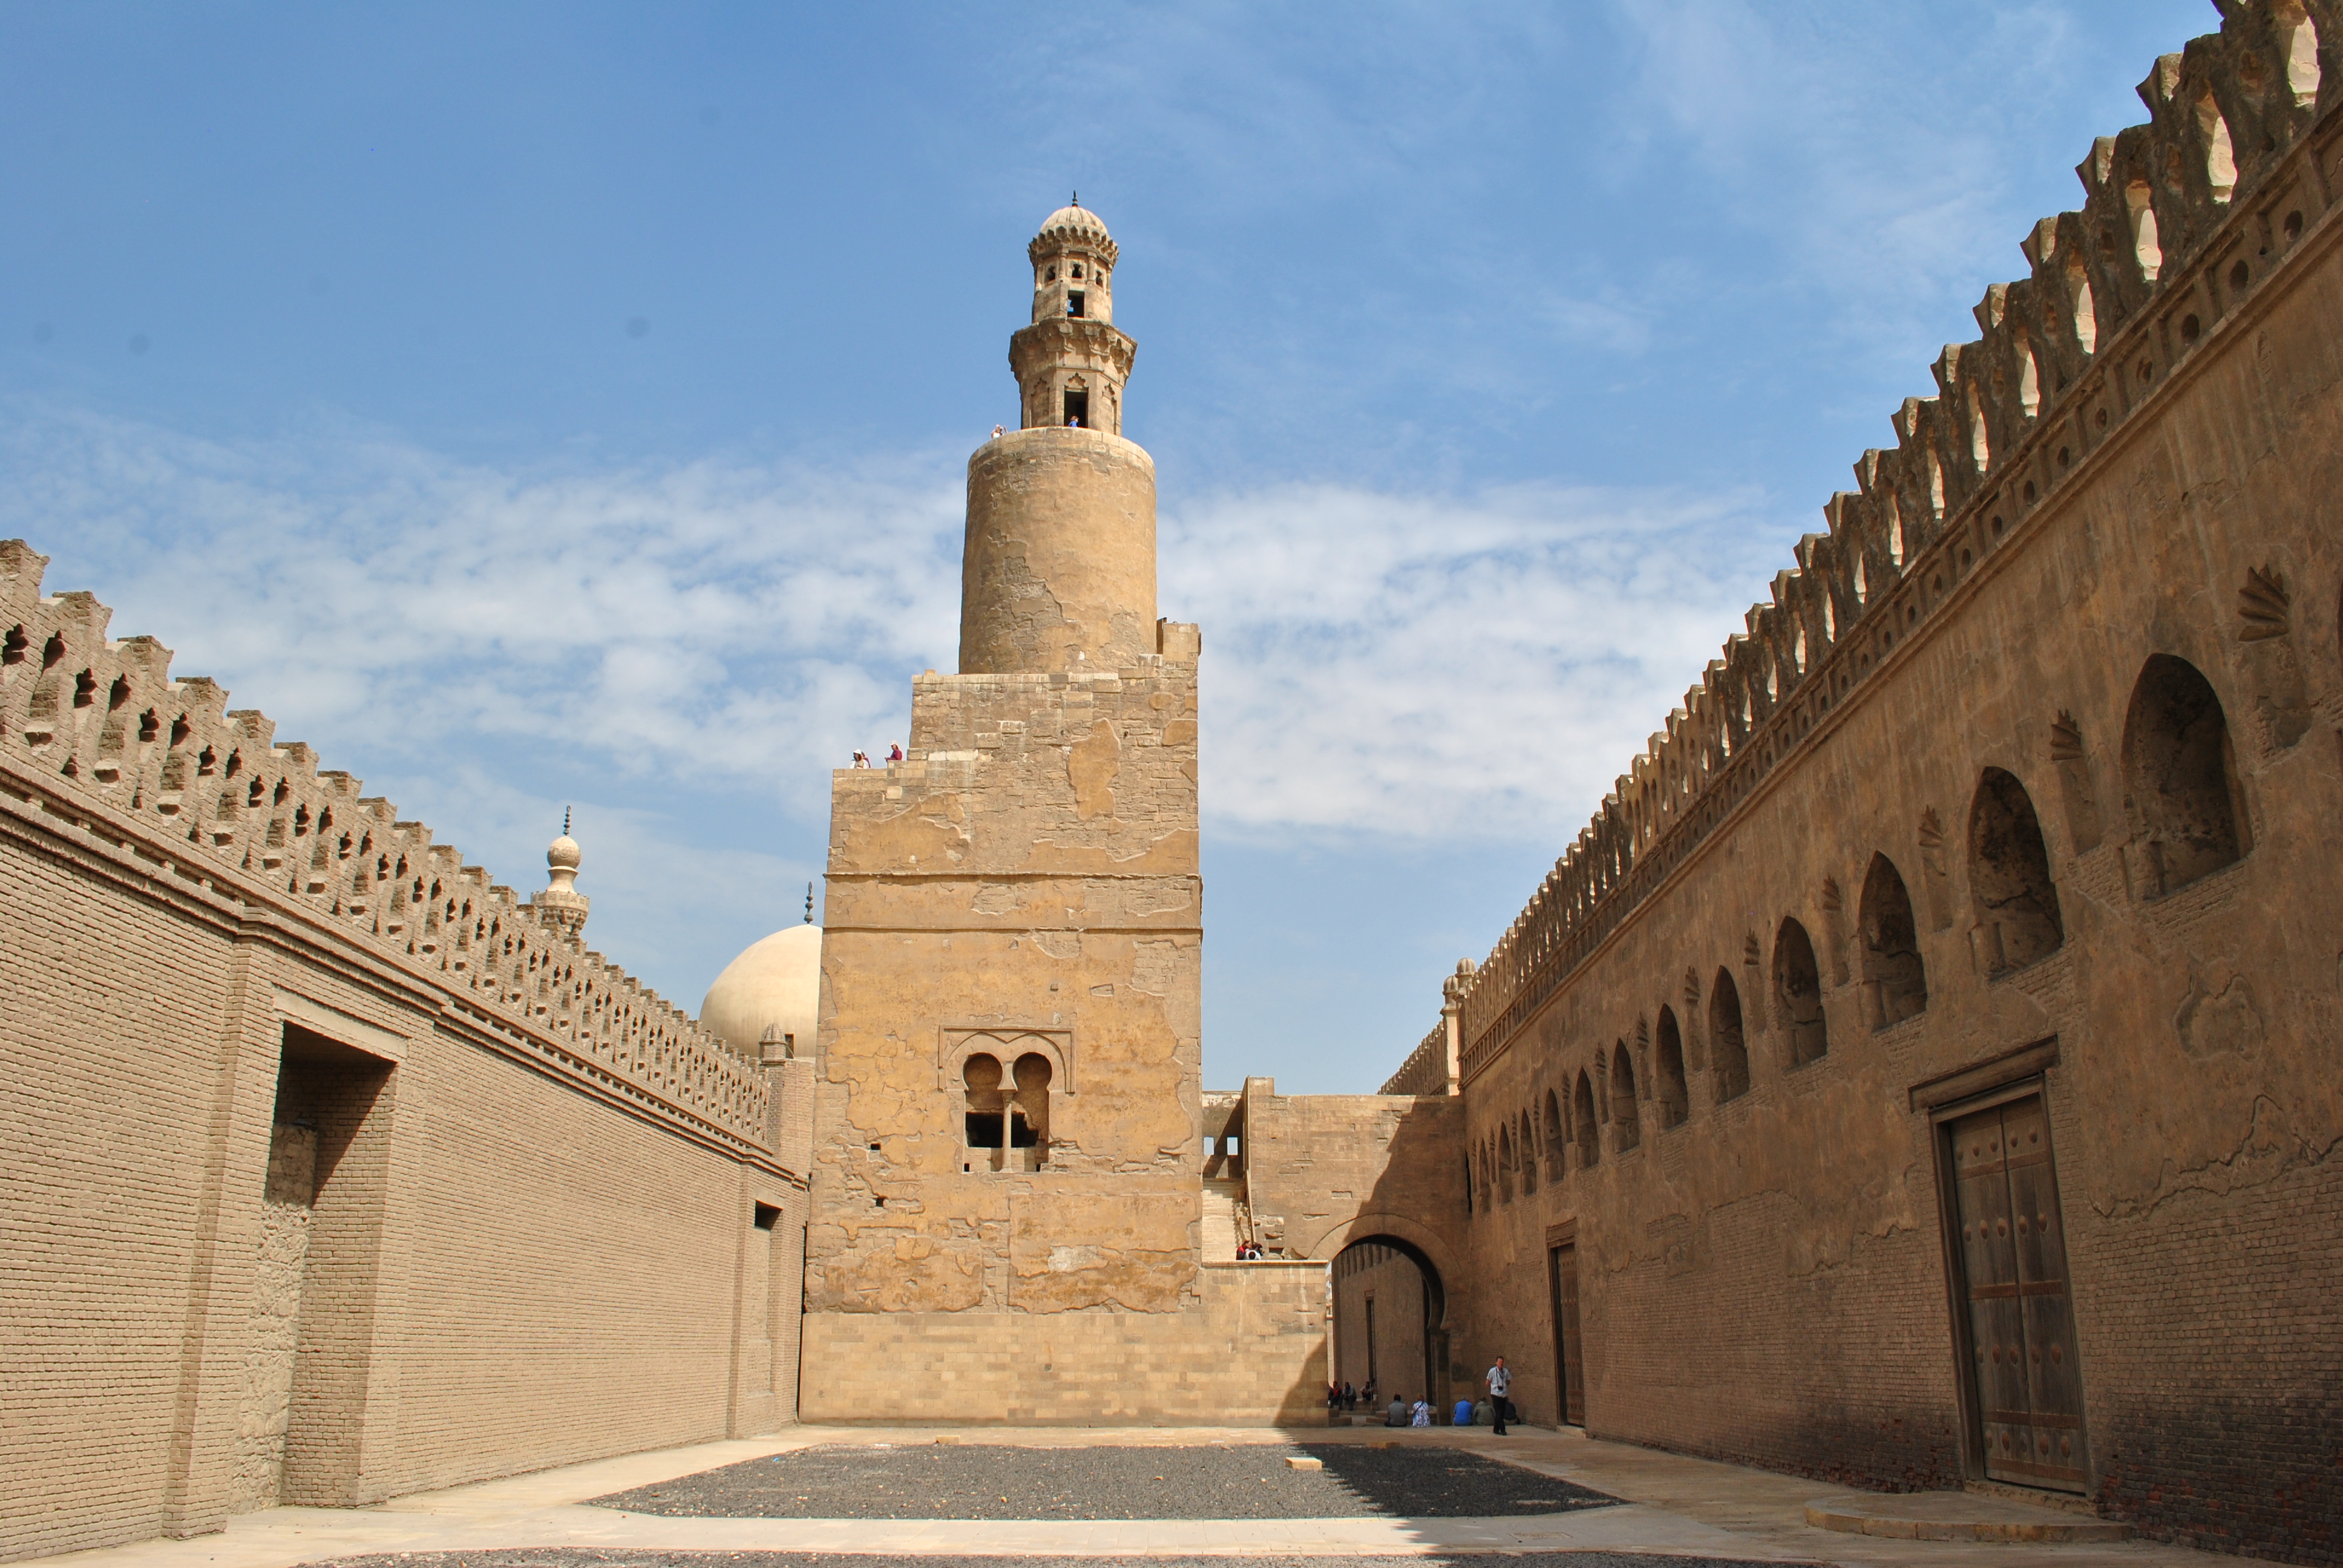 24 04 02 Graves_Egypt's forgotten wonder: The lost city of Ibn Tulun_mosque_minaret